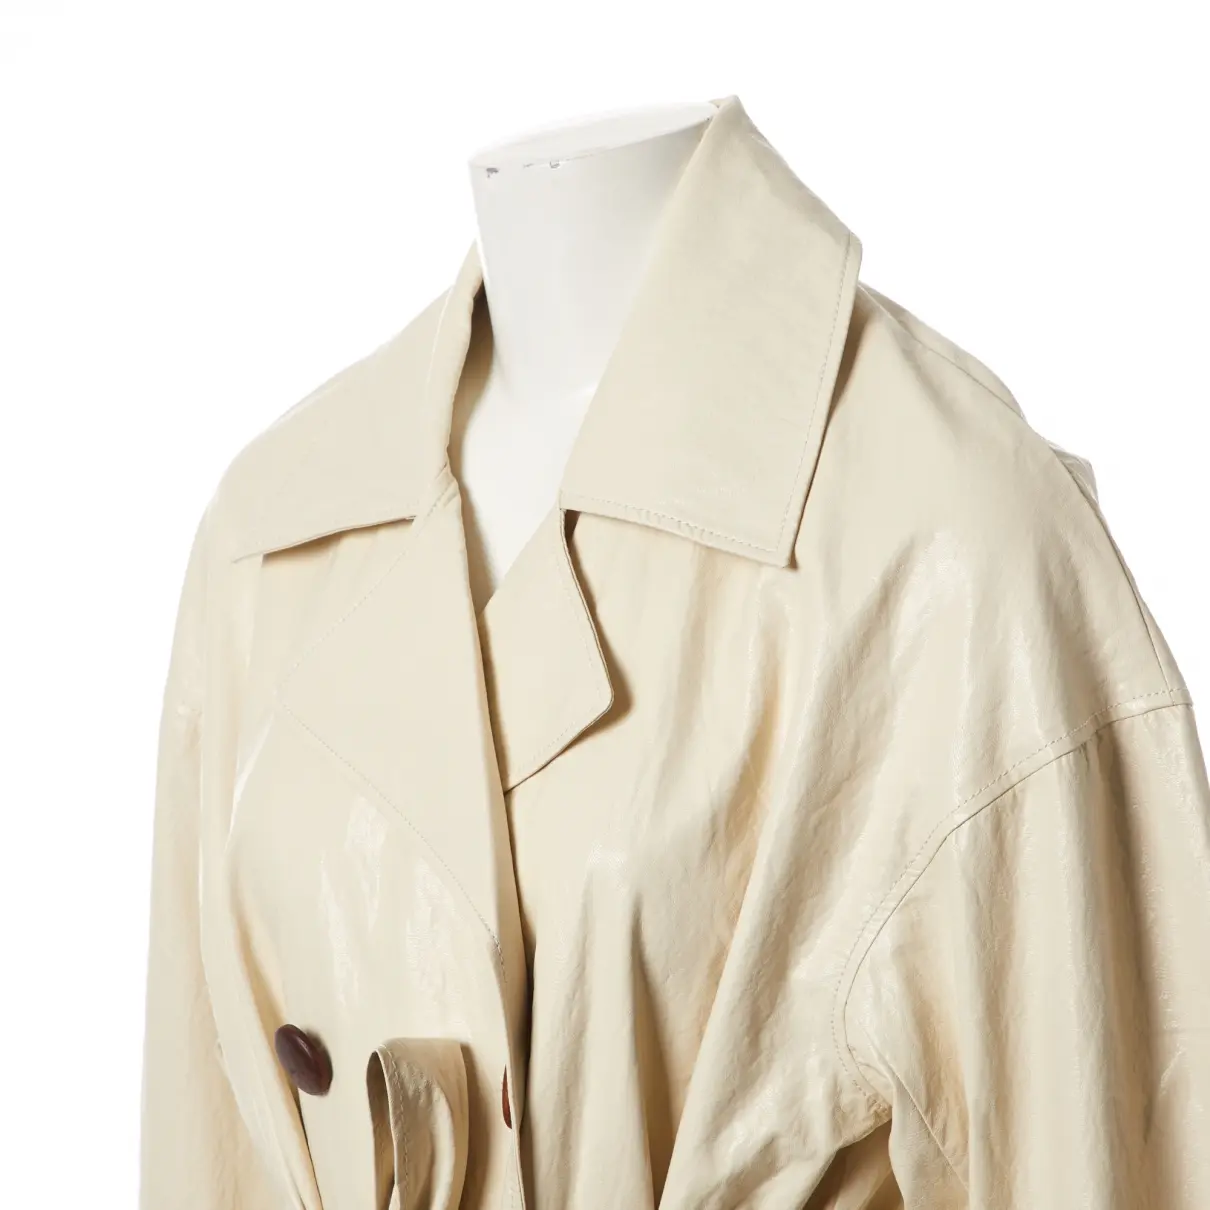 Buy Rejina Pyo x Vestiaire Collective Leather trench coat online